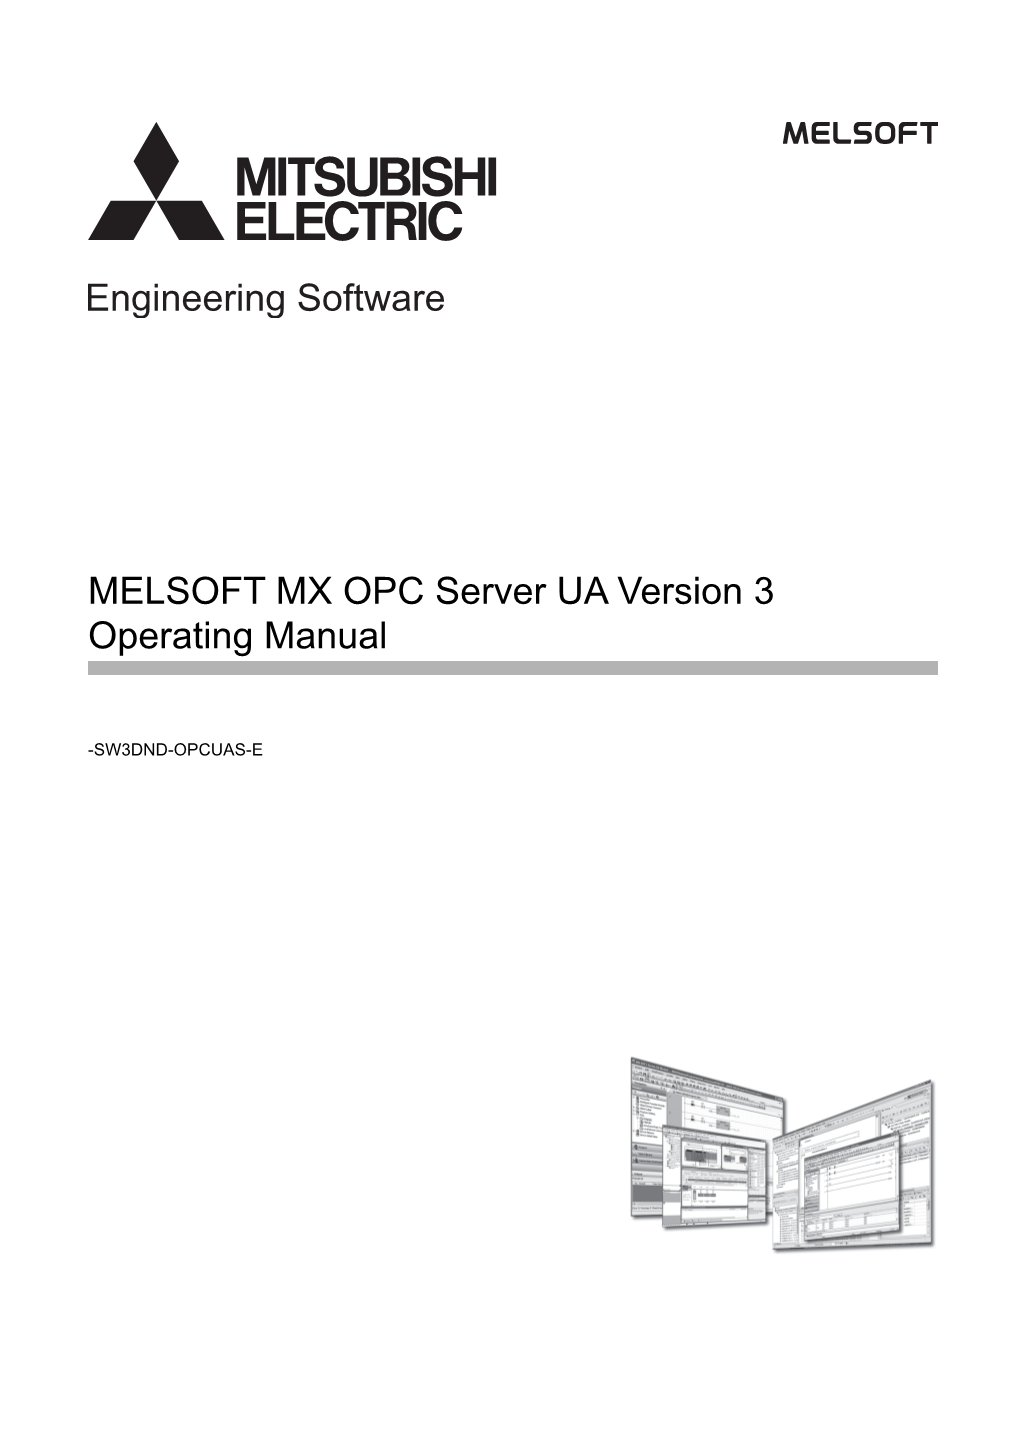 MELSOFT MX OPC Server UA Version 3 Operating Manual